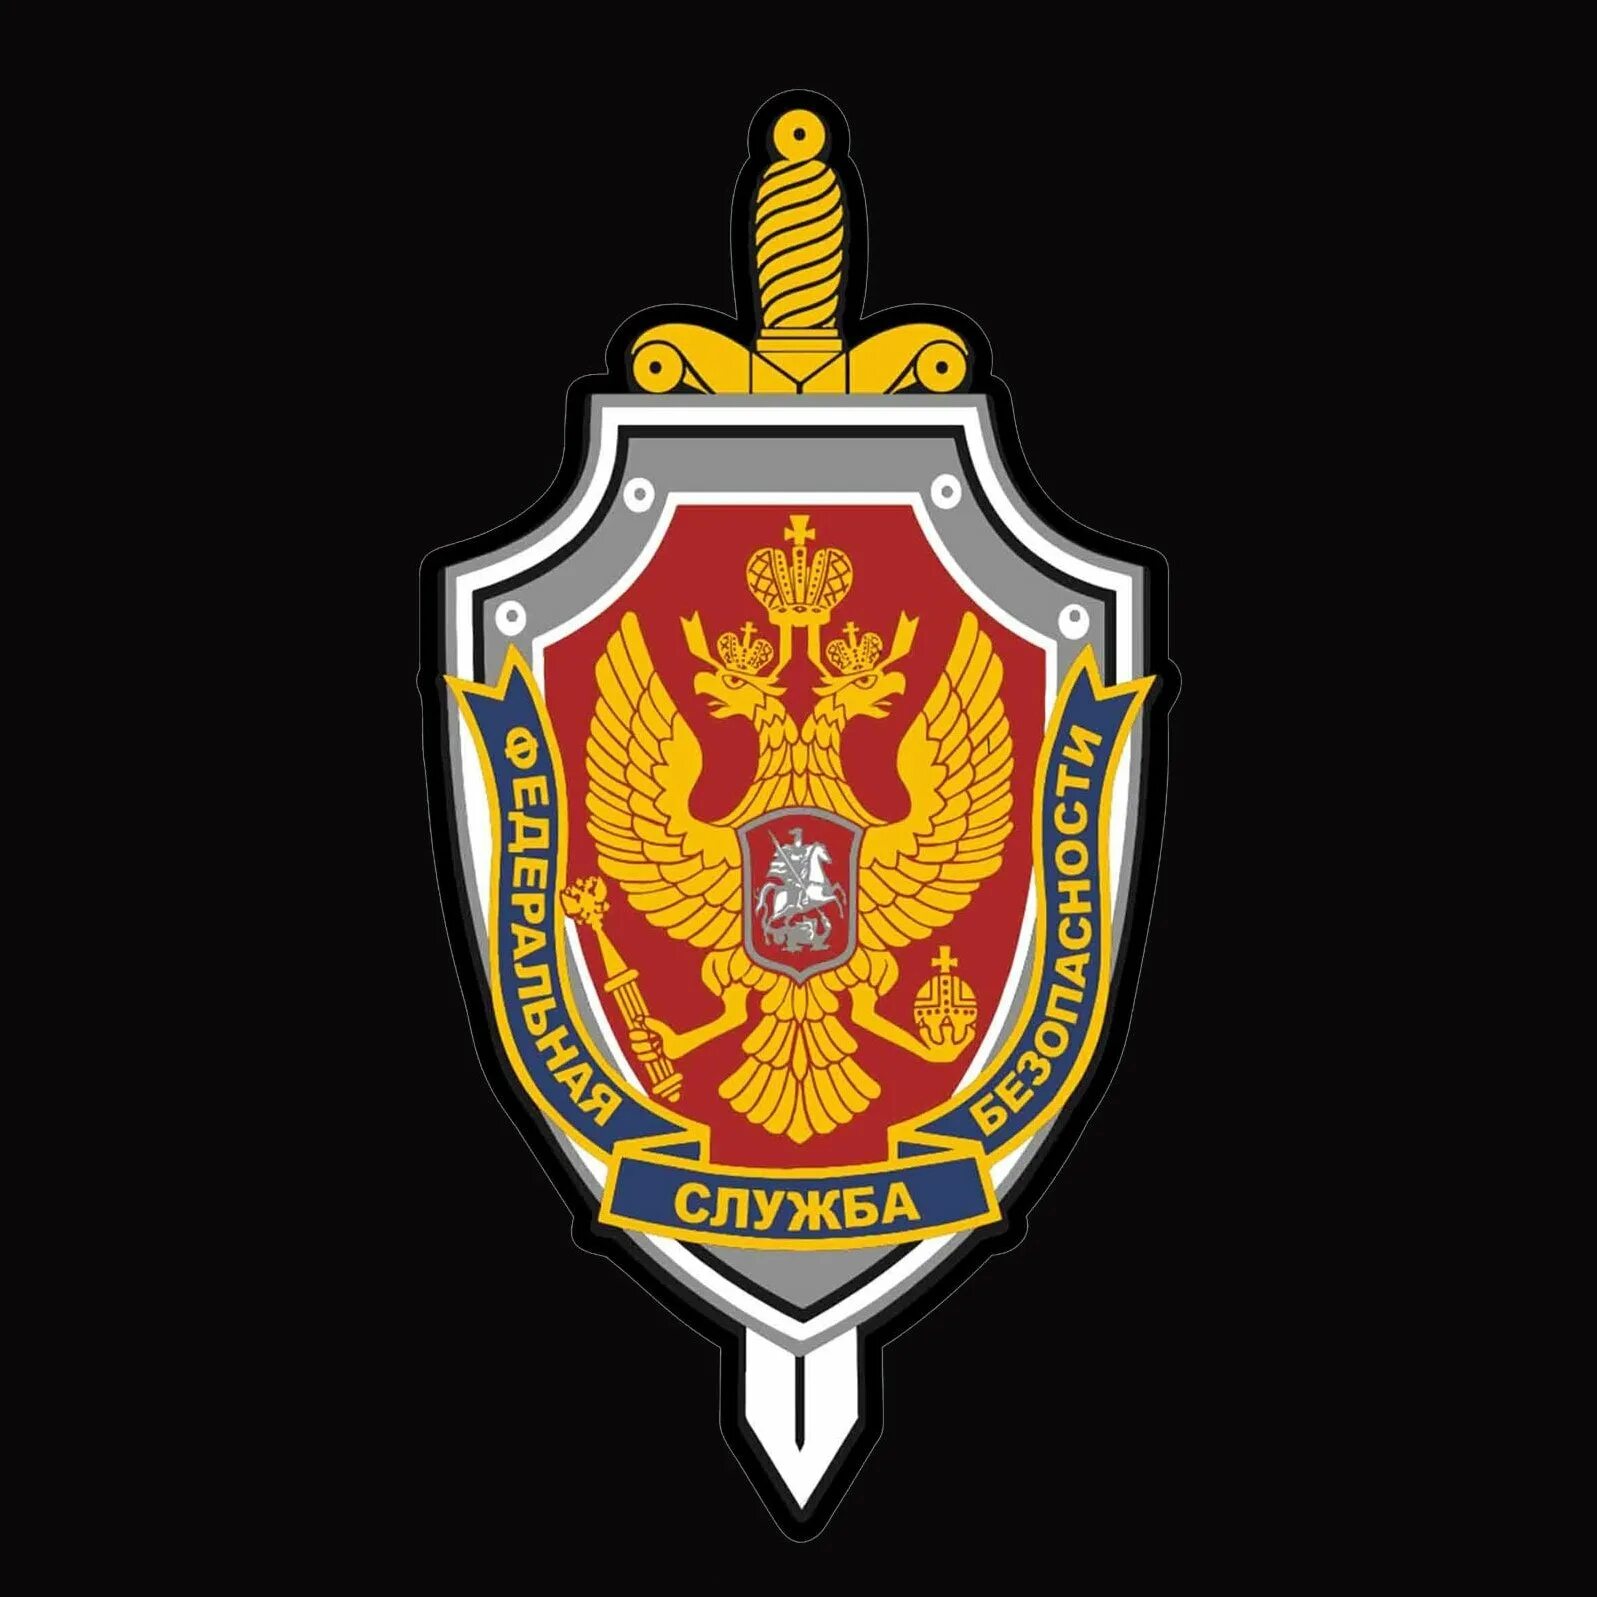 Едина служба безопасности. Федеральная служба безопасности герб. Федеральная служба безопасности Российской Федерации лого.